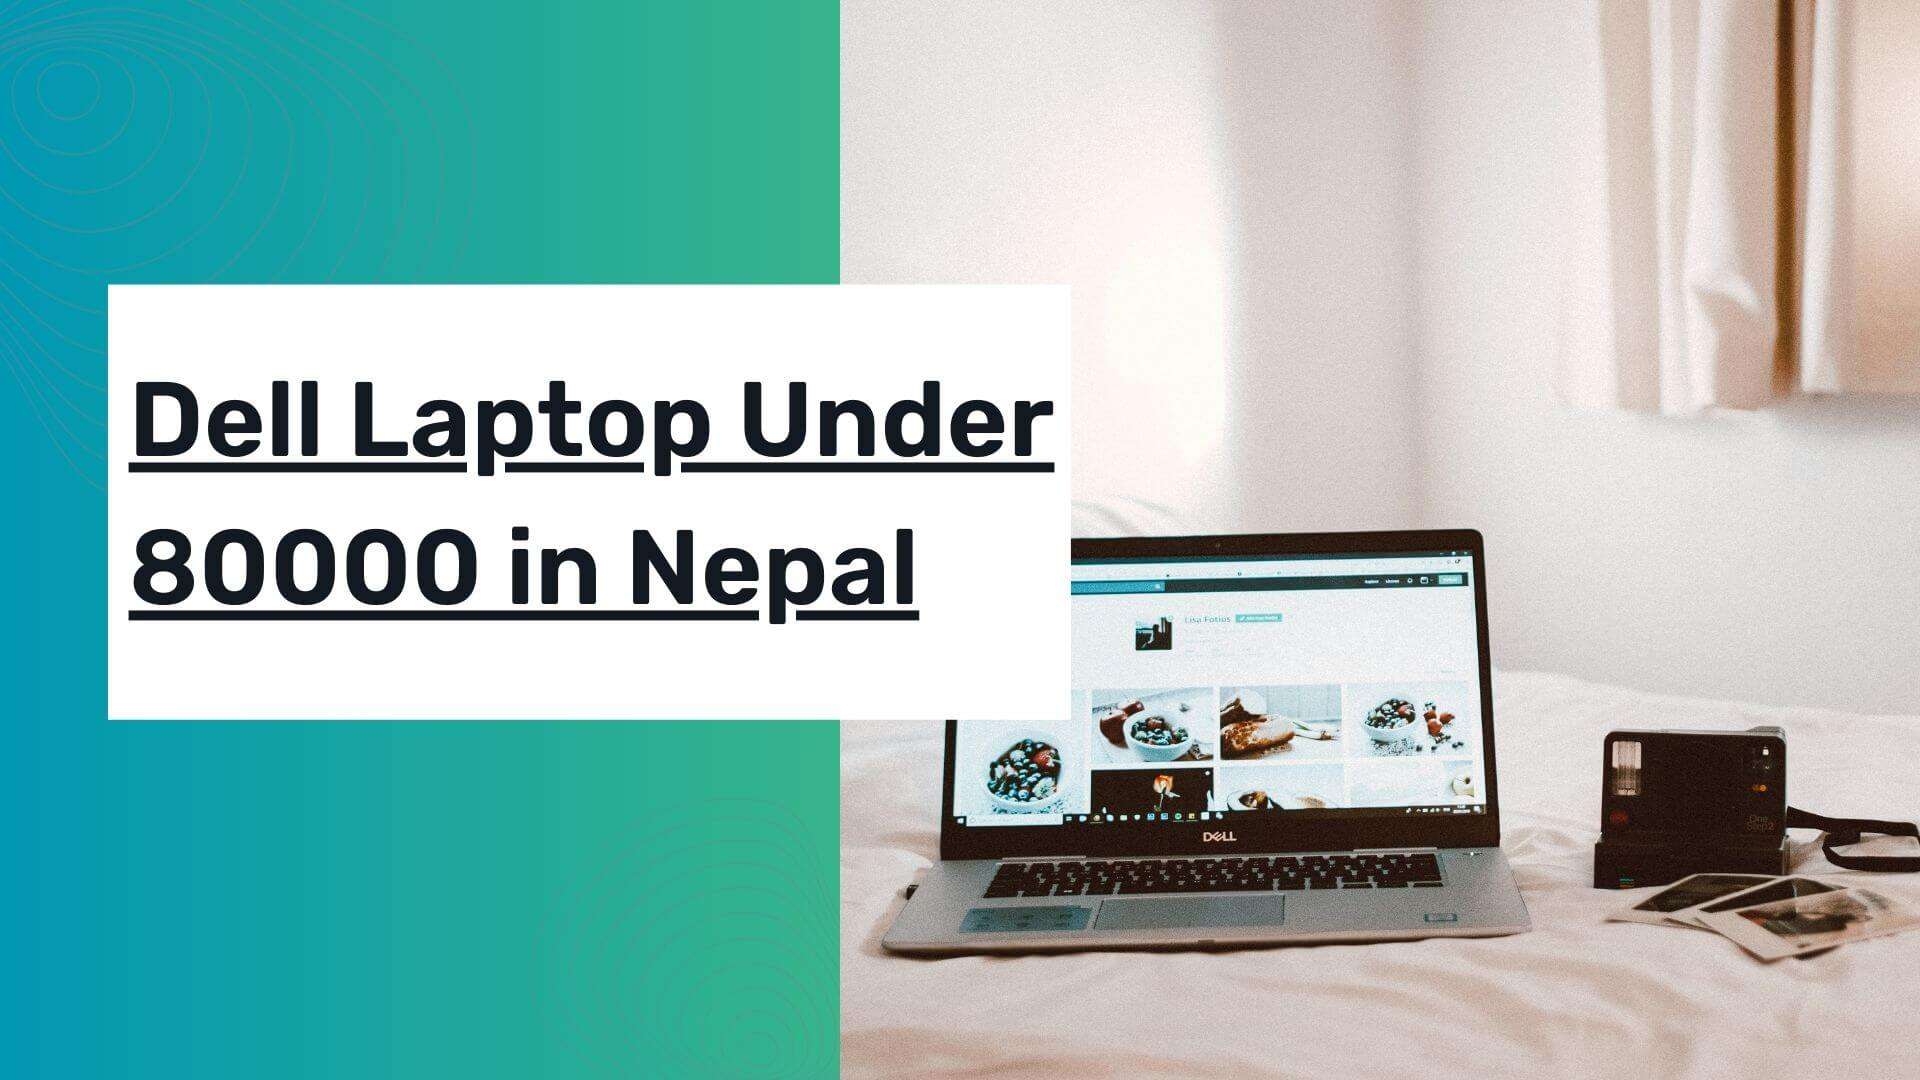 Dell Laptop Under 80000 in Nepal